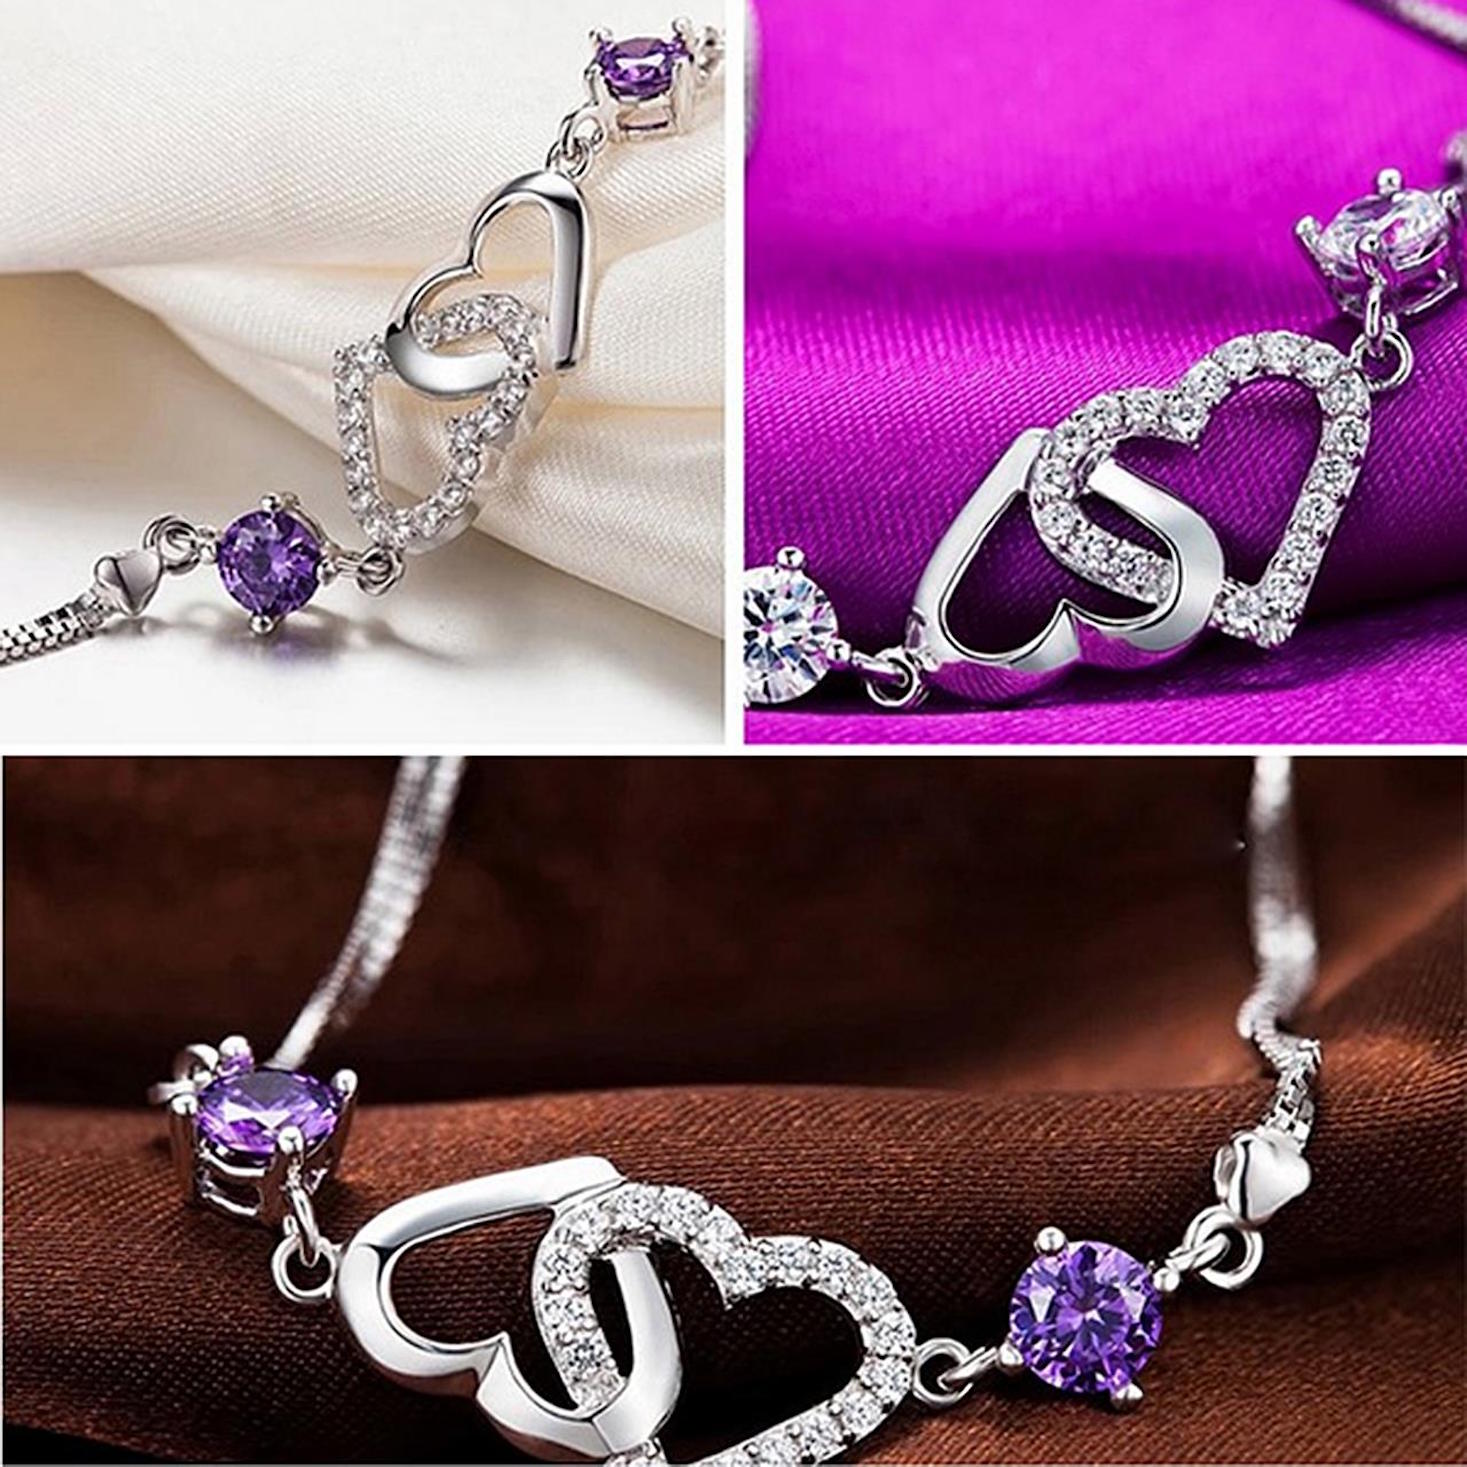 Pin by ꪹꪊꪉꪖꪶ 🎧 on ⑉α¢¢єѕѕσяιєѕ⑉ | Silver bracelet designs, Silver bracelets  for women, Diamond bracelet design